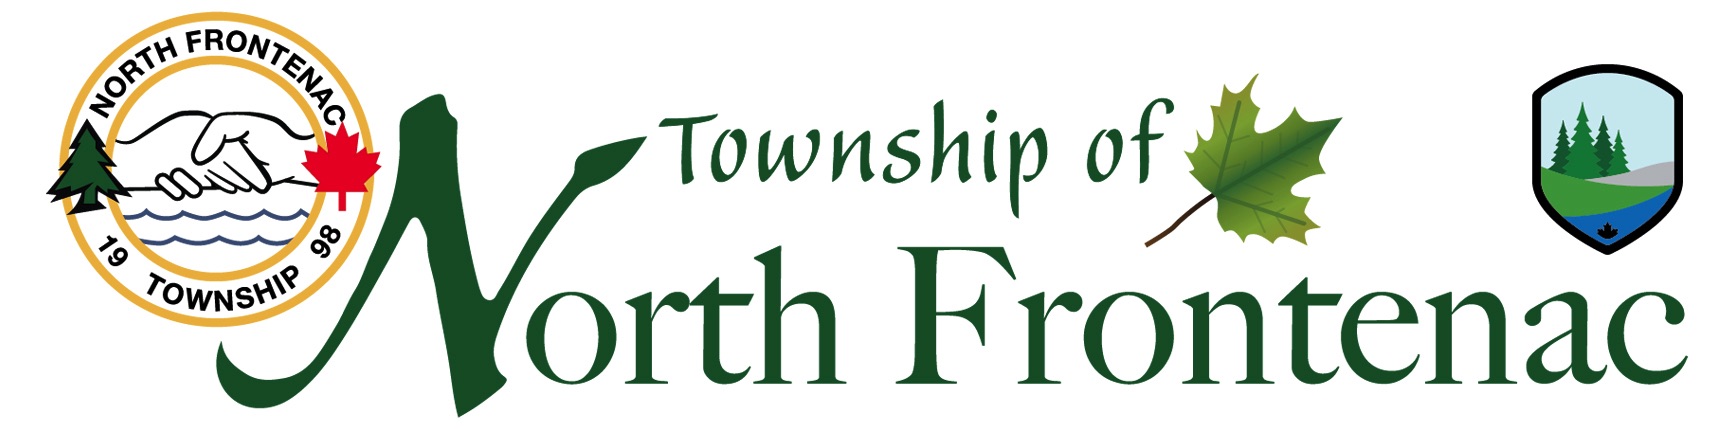 Township on North Frontenac Logo